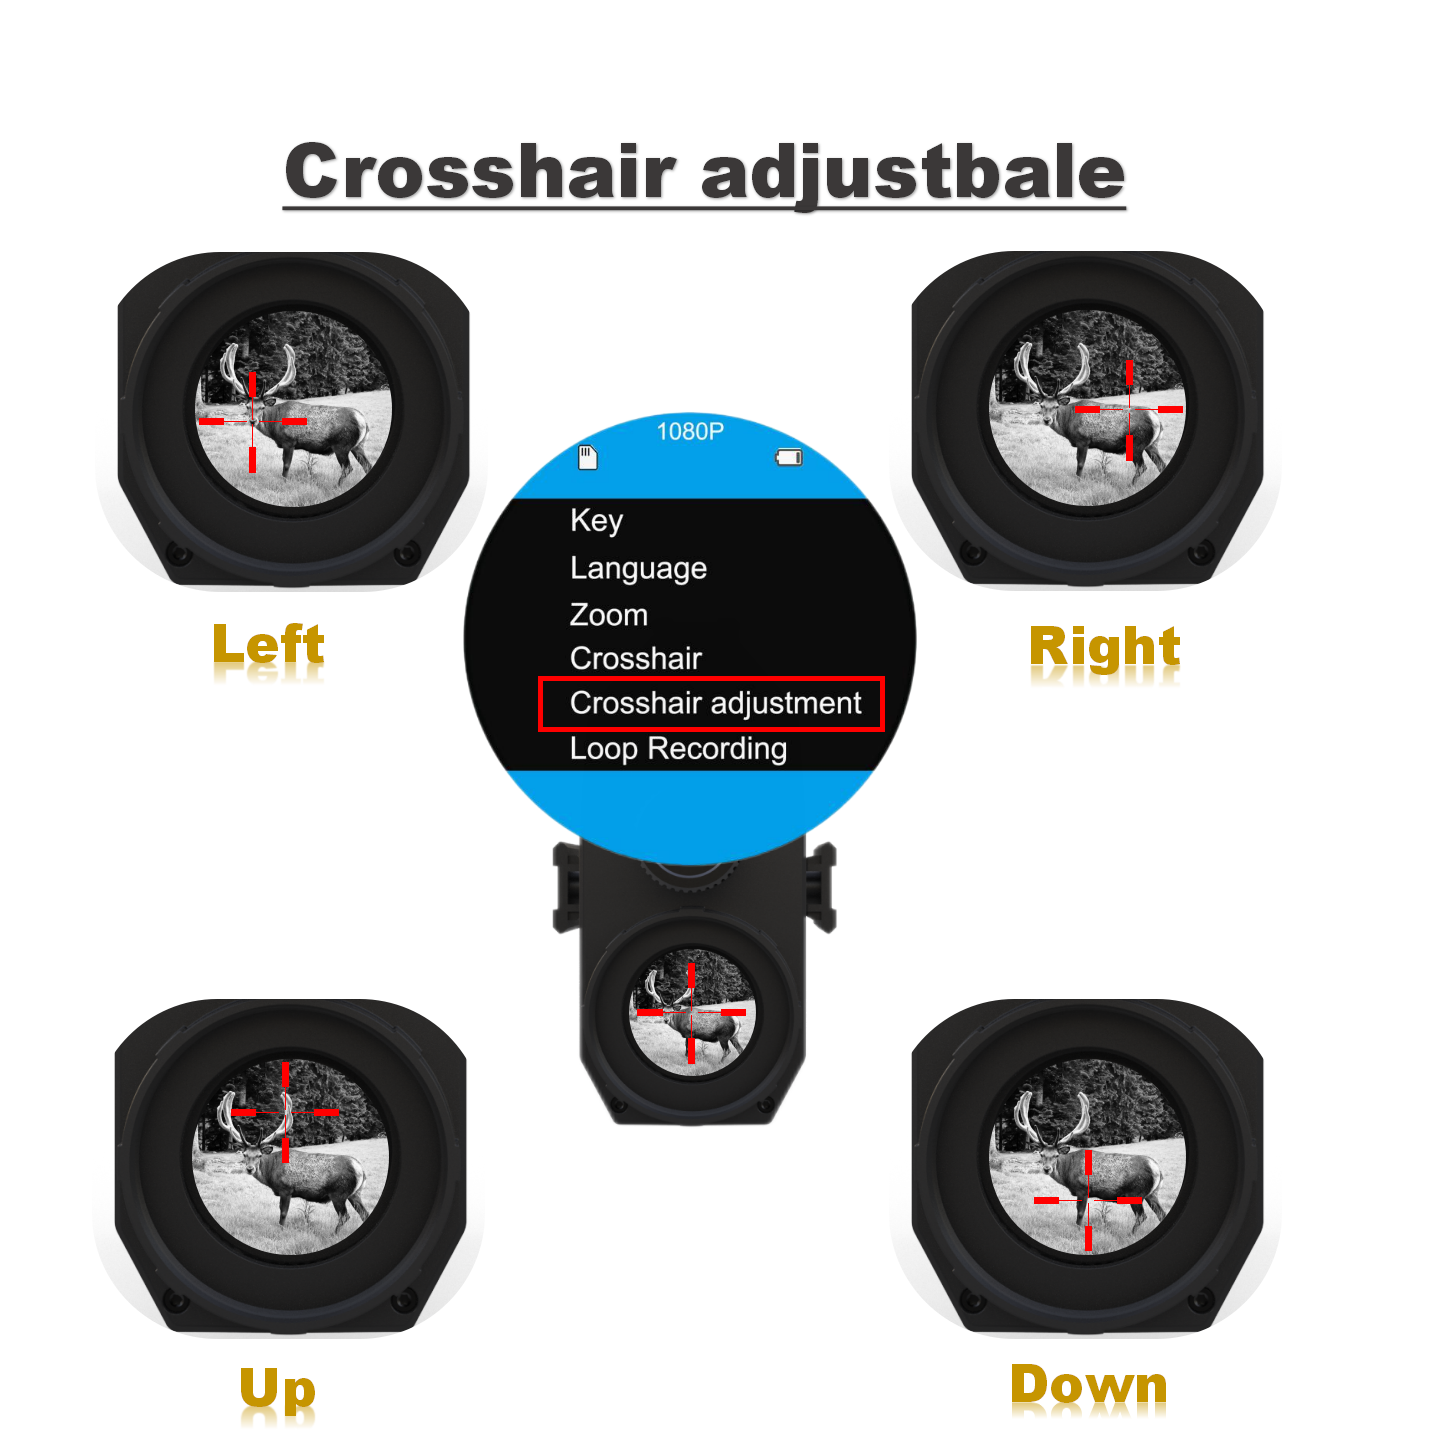 Adjustable digital crosshair